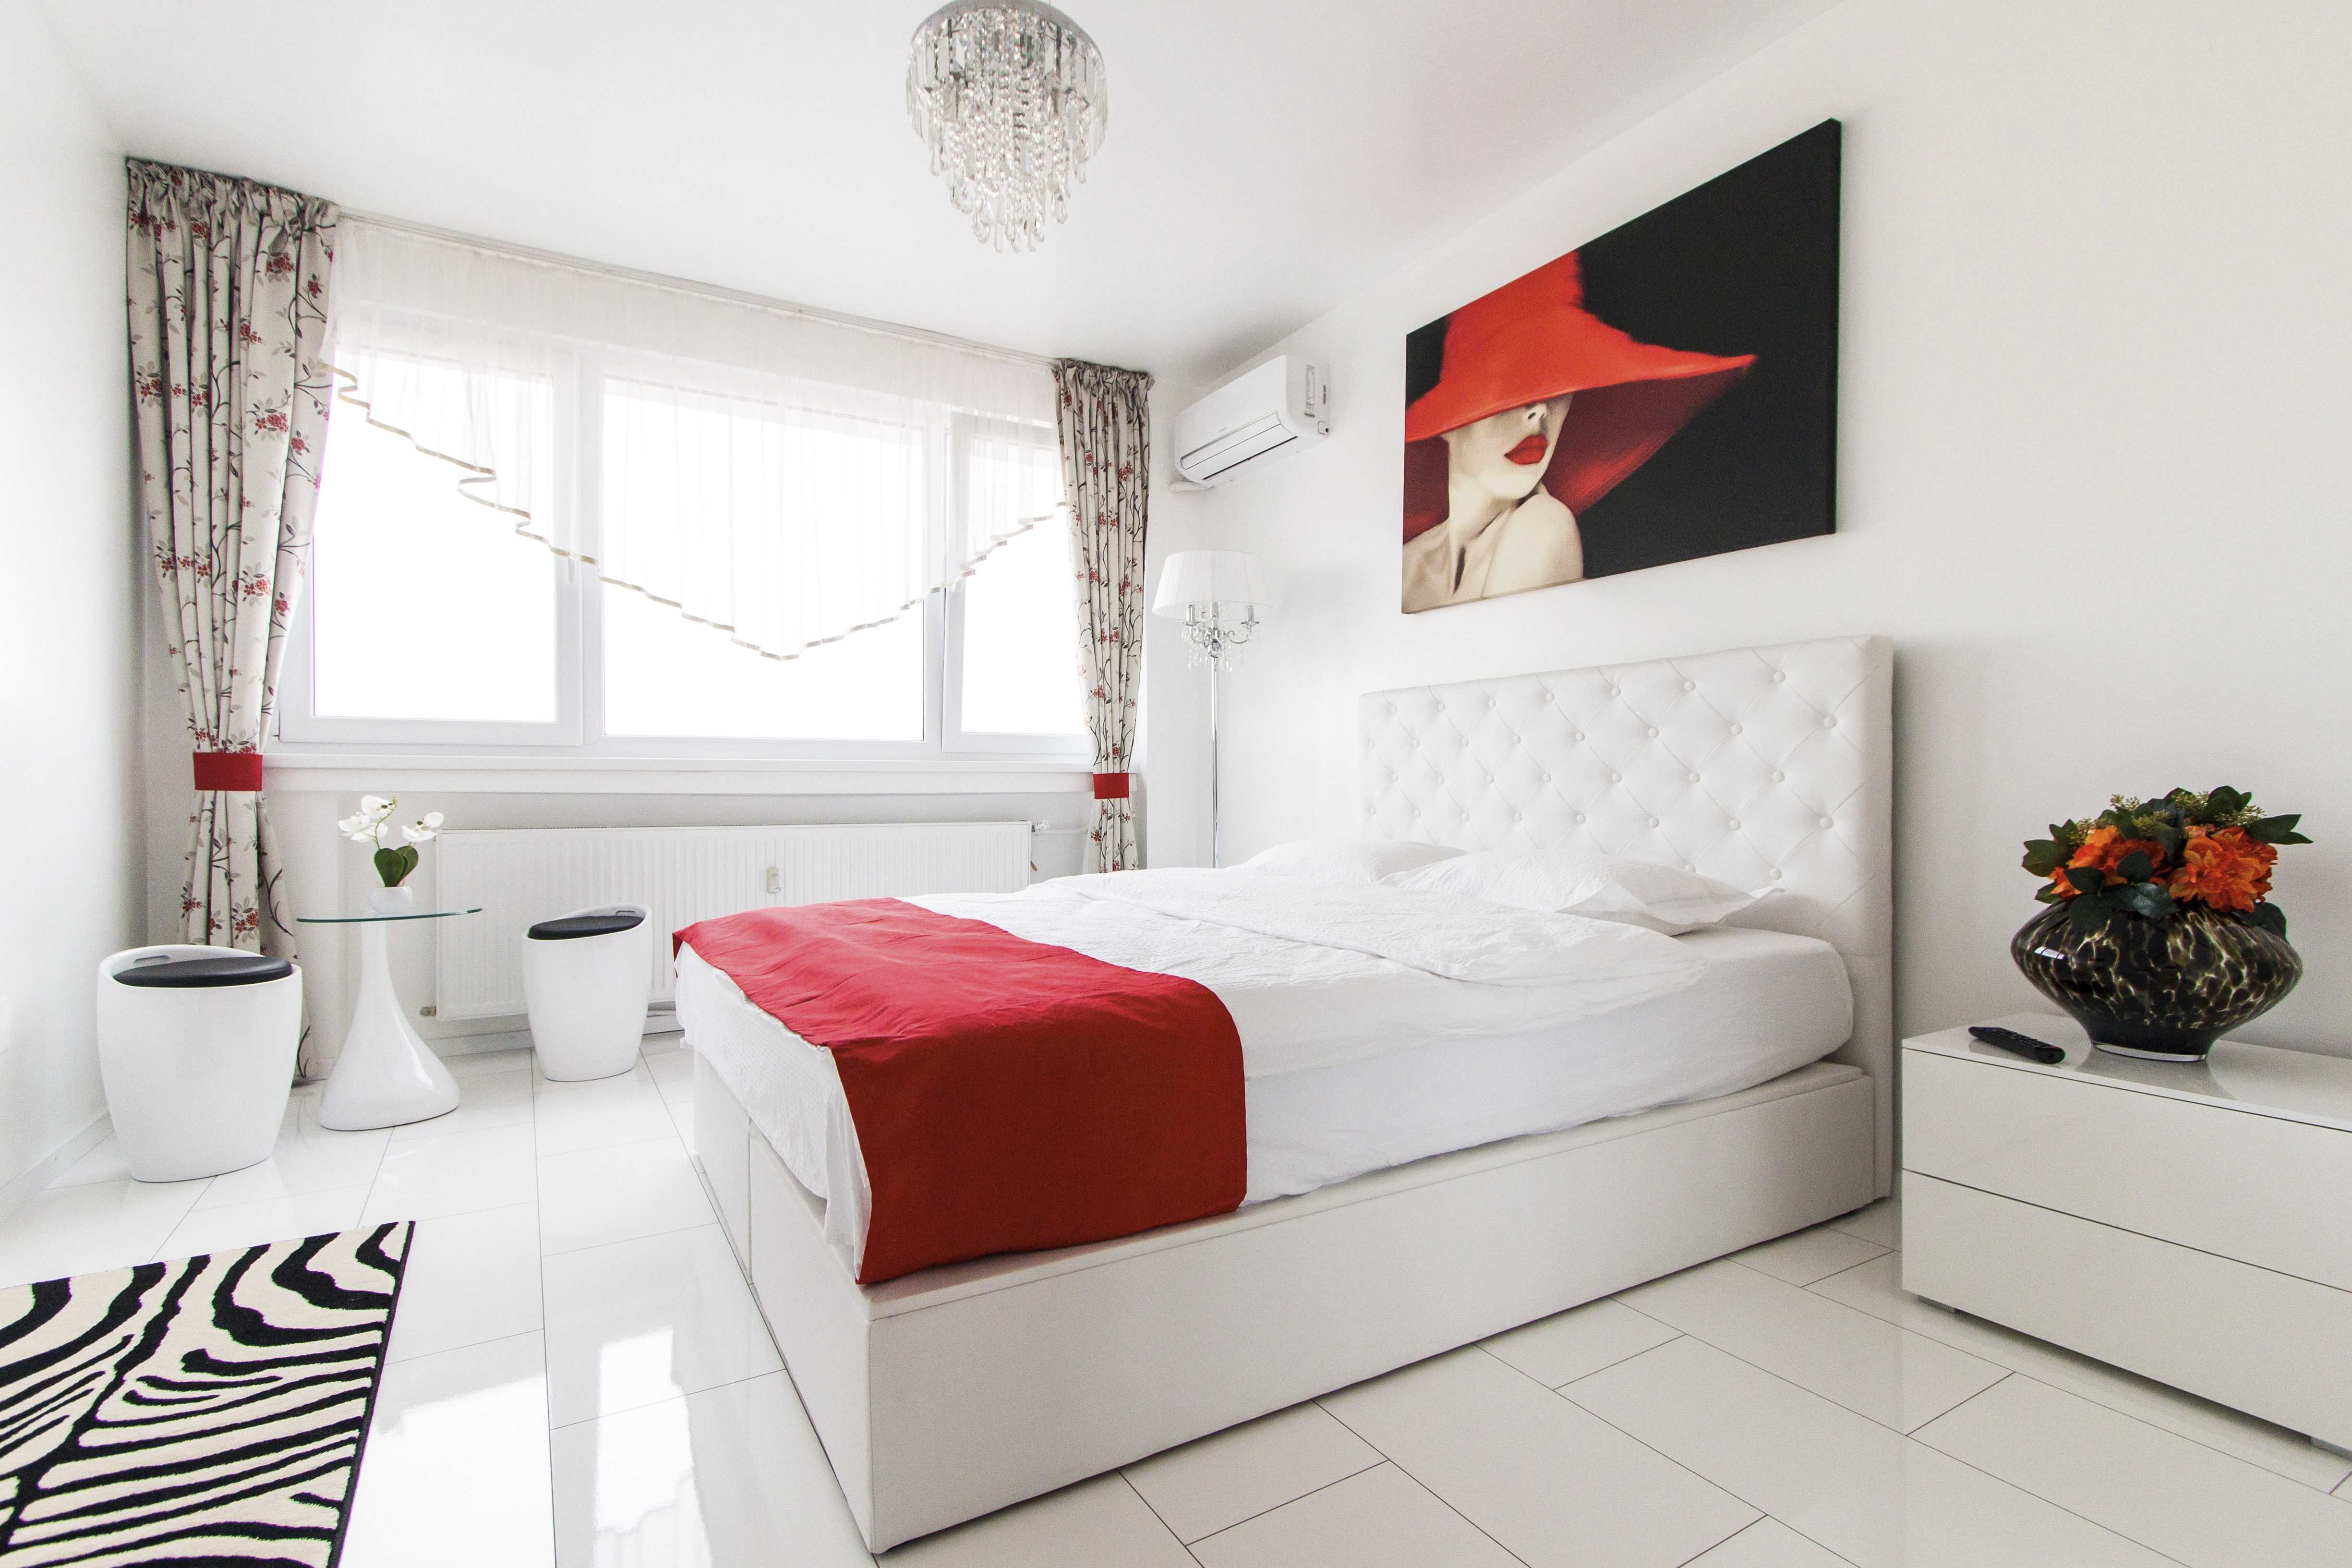 Fotografie imobiliara, apartamente, case, interioare, booking, airbnb